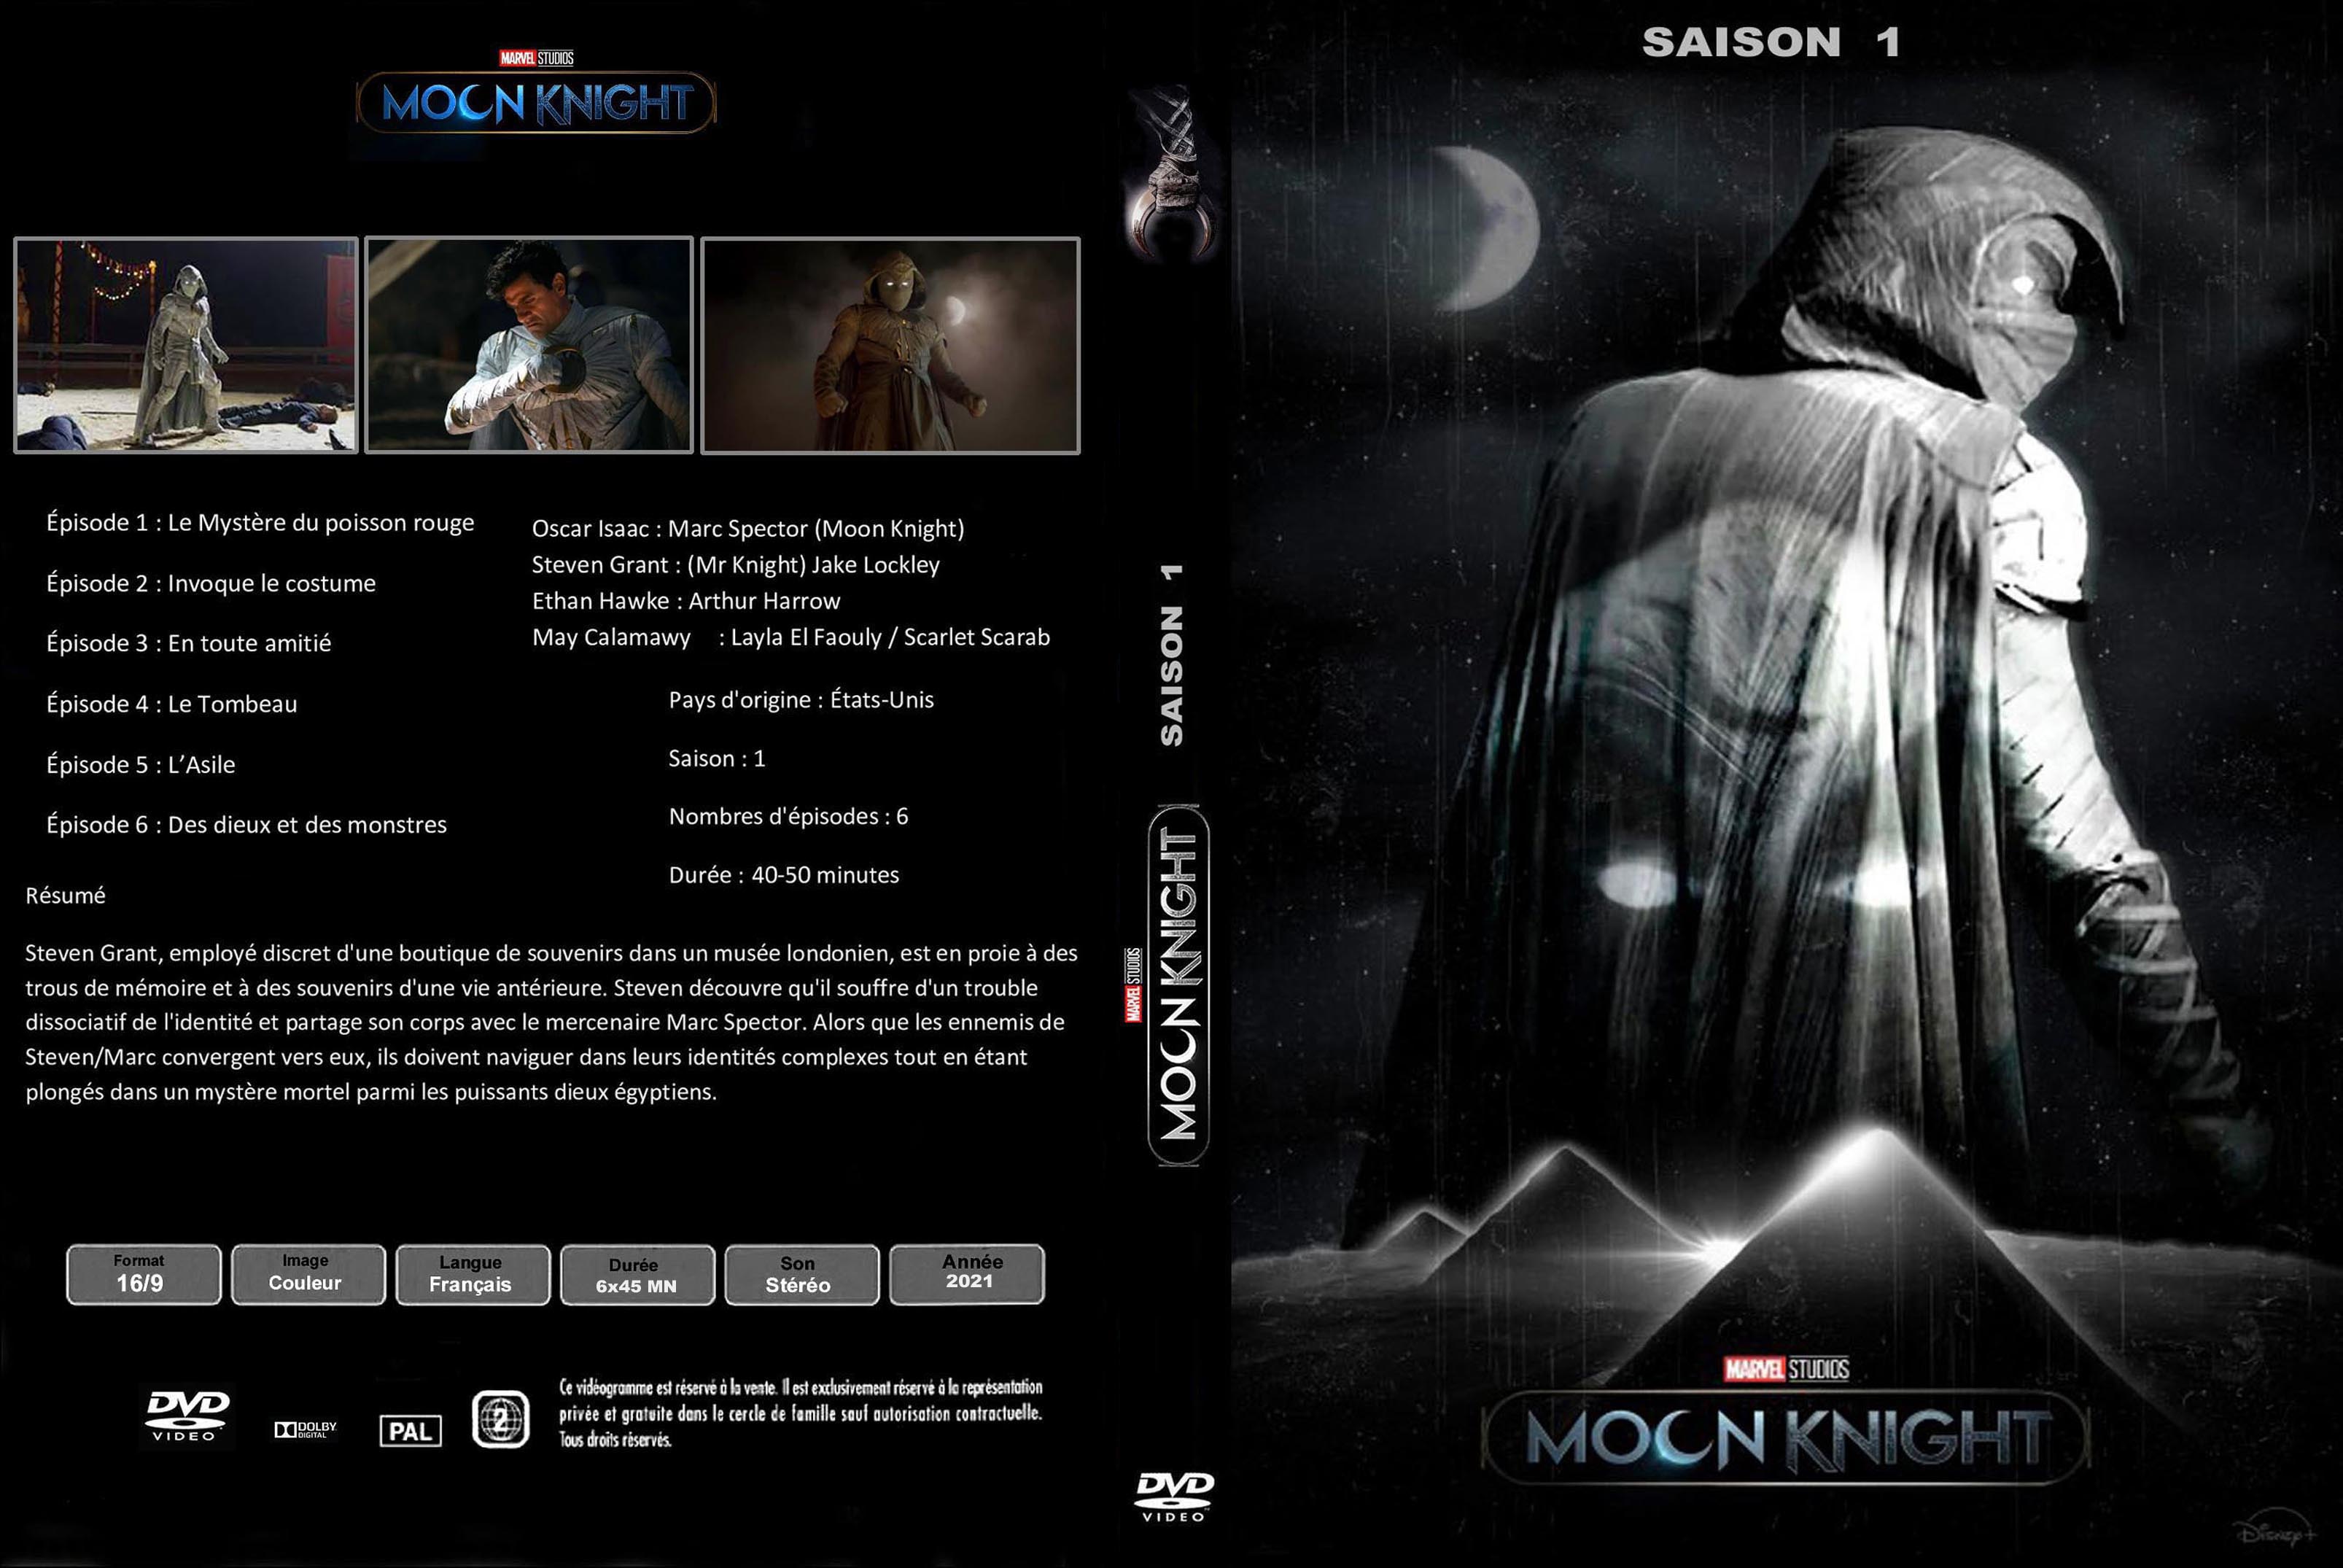 Jaquette DVD Moon Knight saison 1 custom